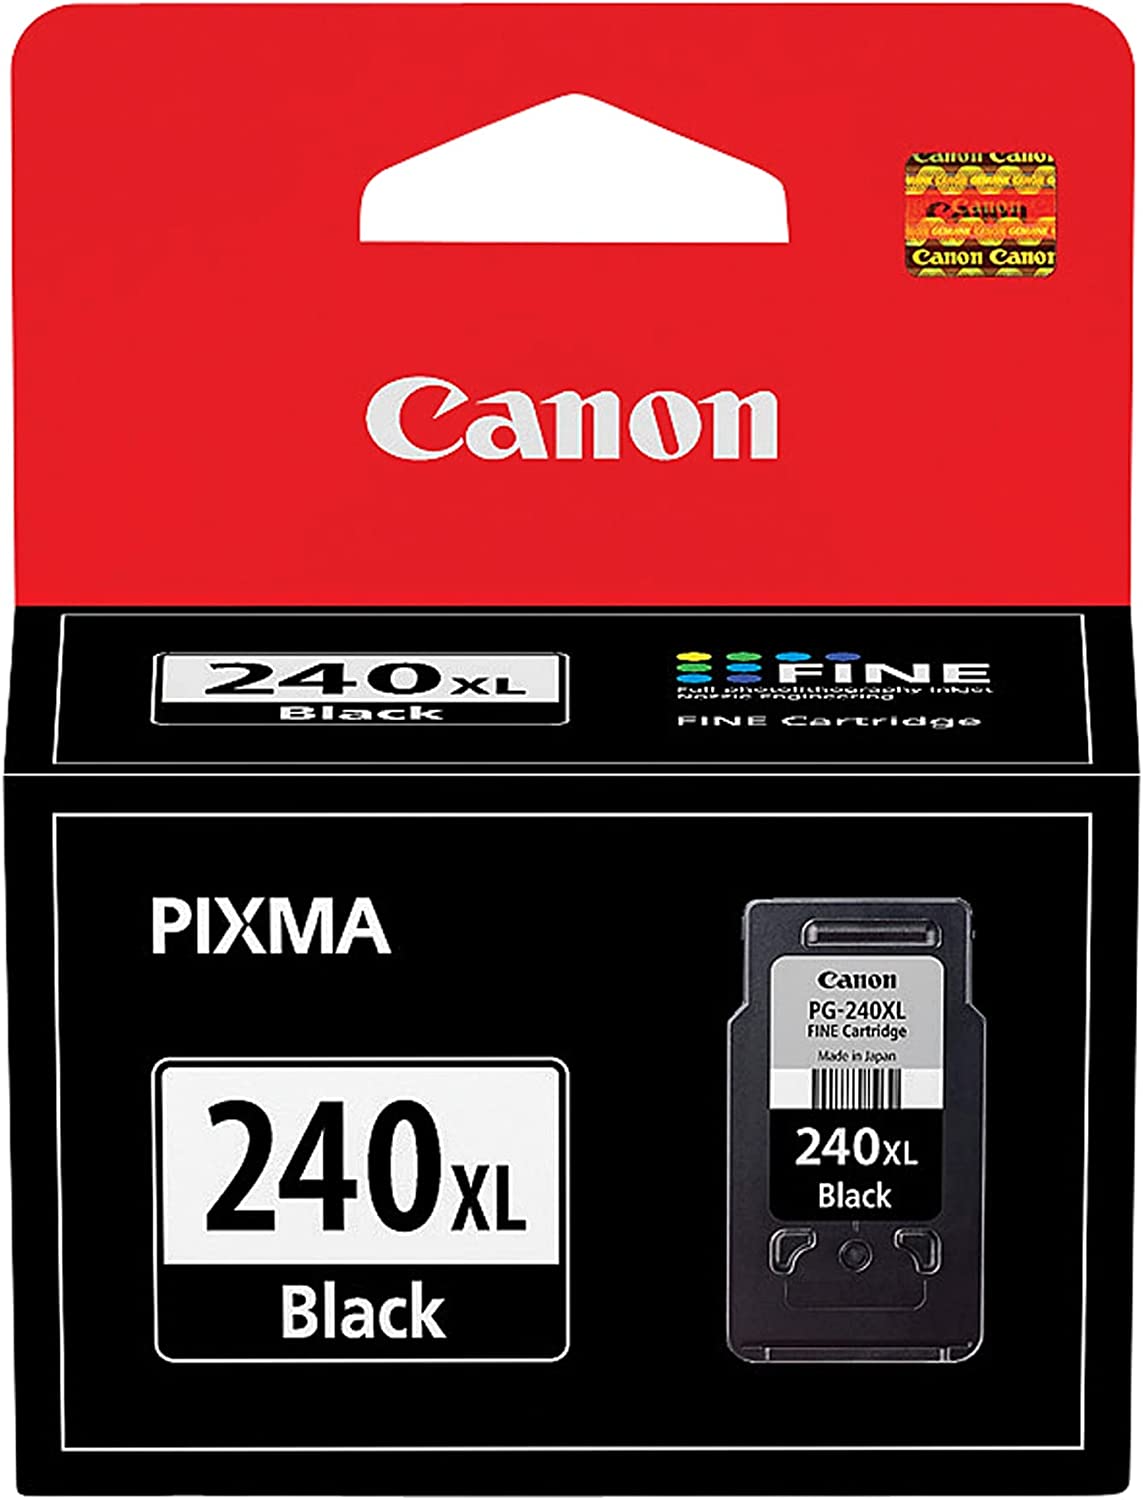 Canon PG-240 XL 블랙 잉크 카트리지 프린터 MG2120, MG3120, MG4120, MX512, MX432, MX372, MX522, MX452, MG3520, MG3620, MX472, MX532, TS5120